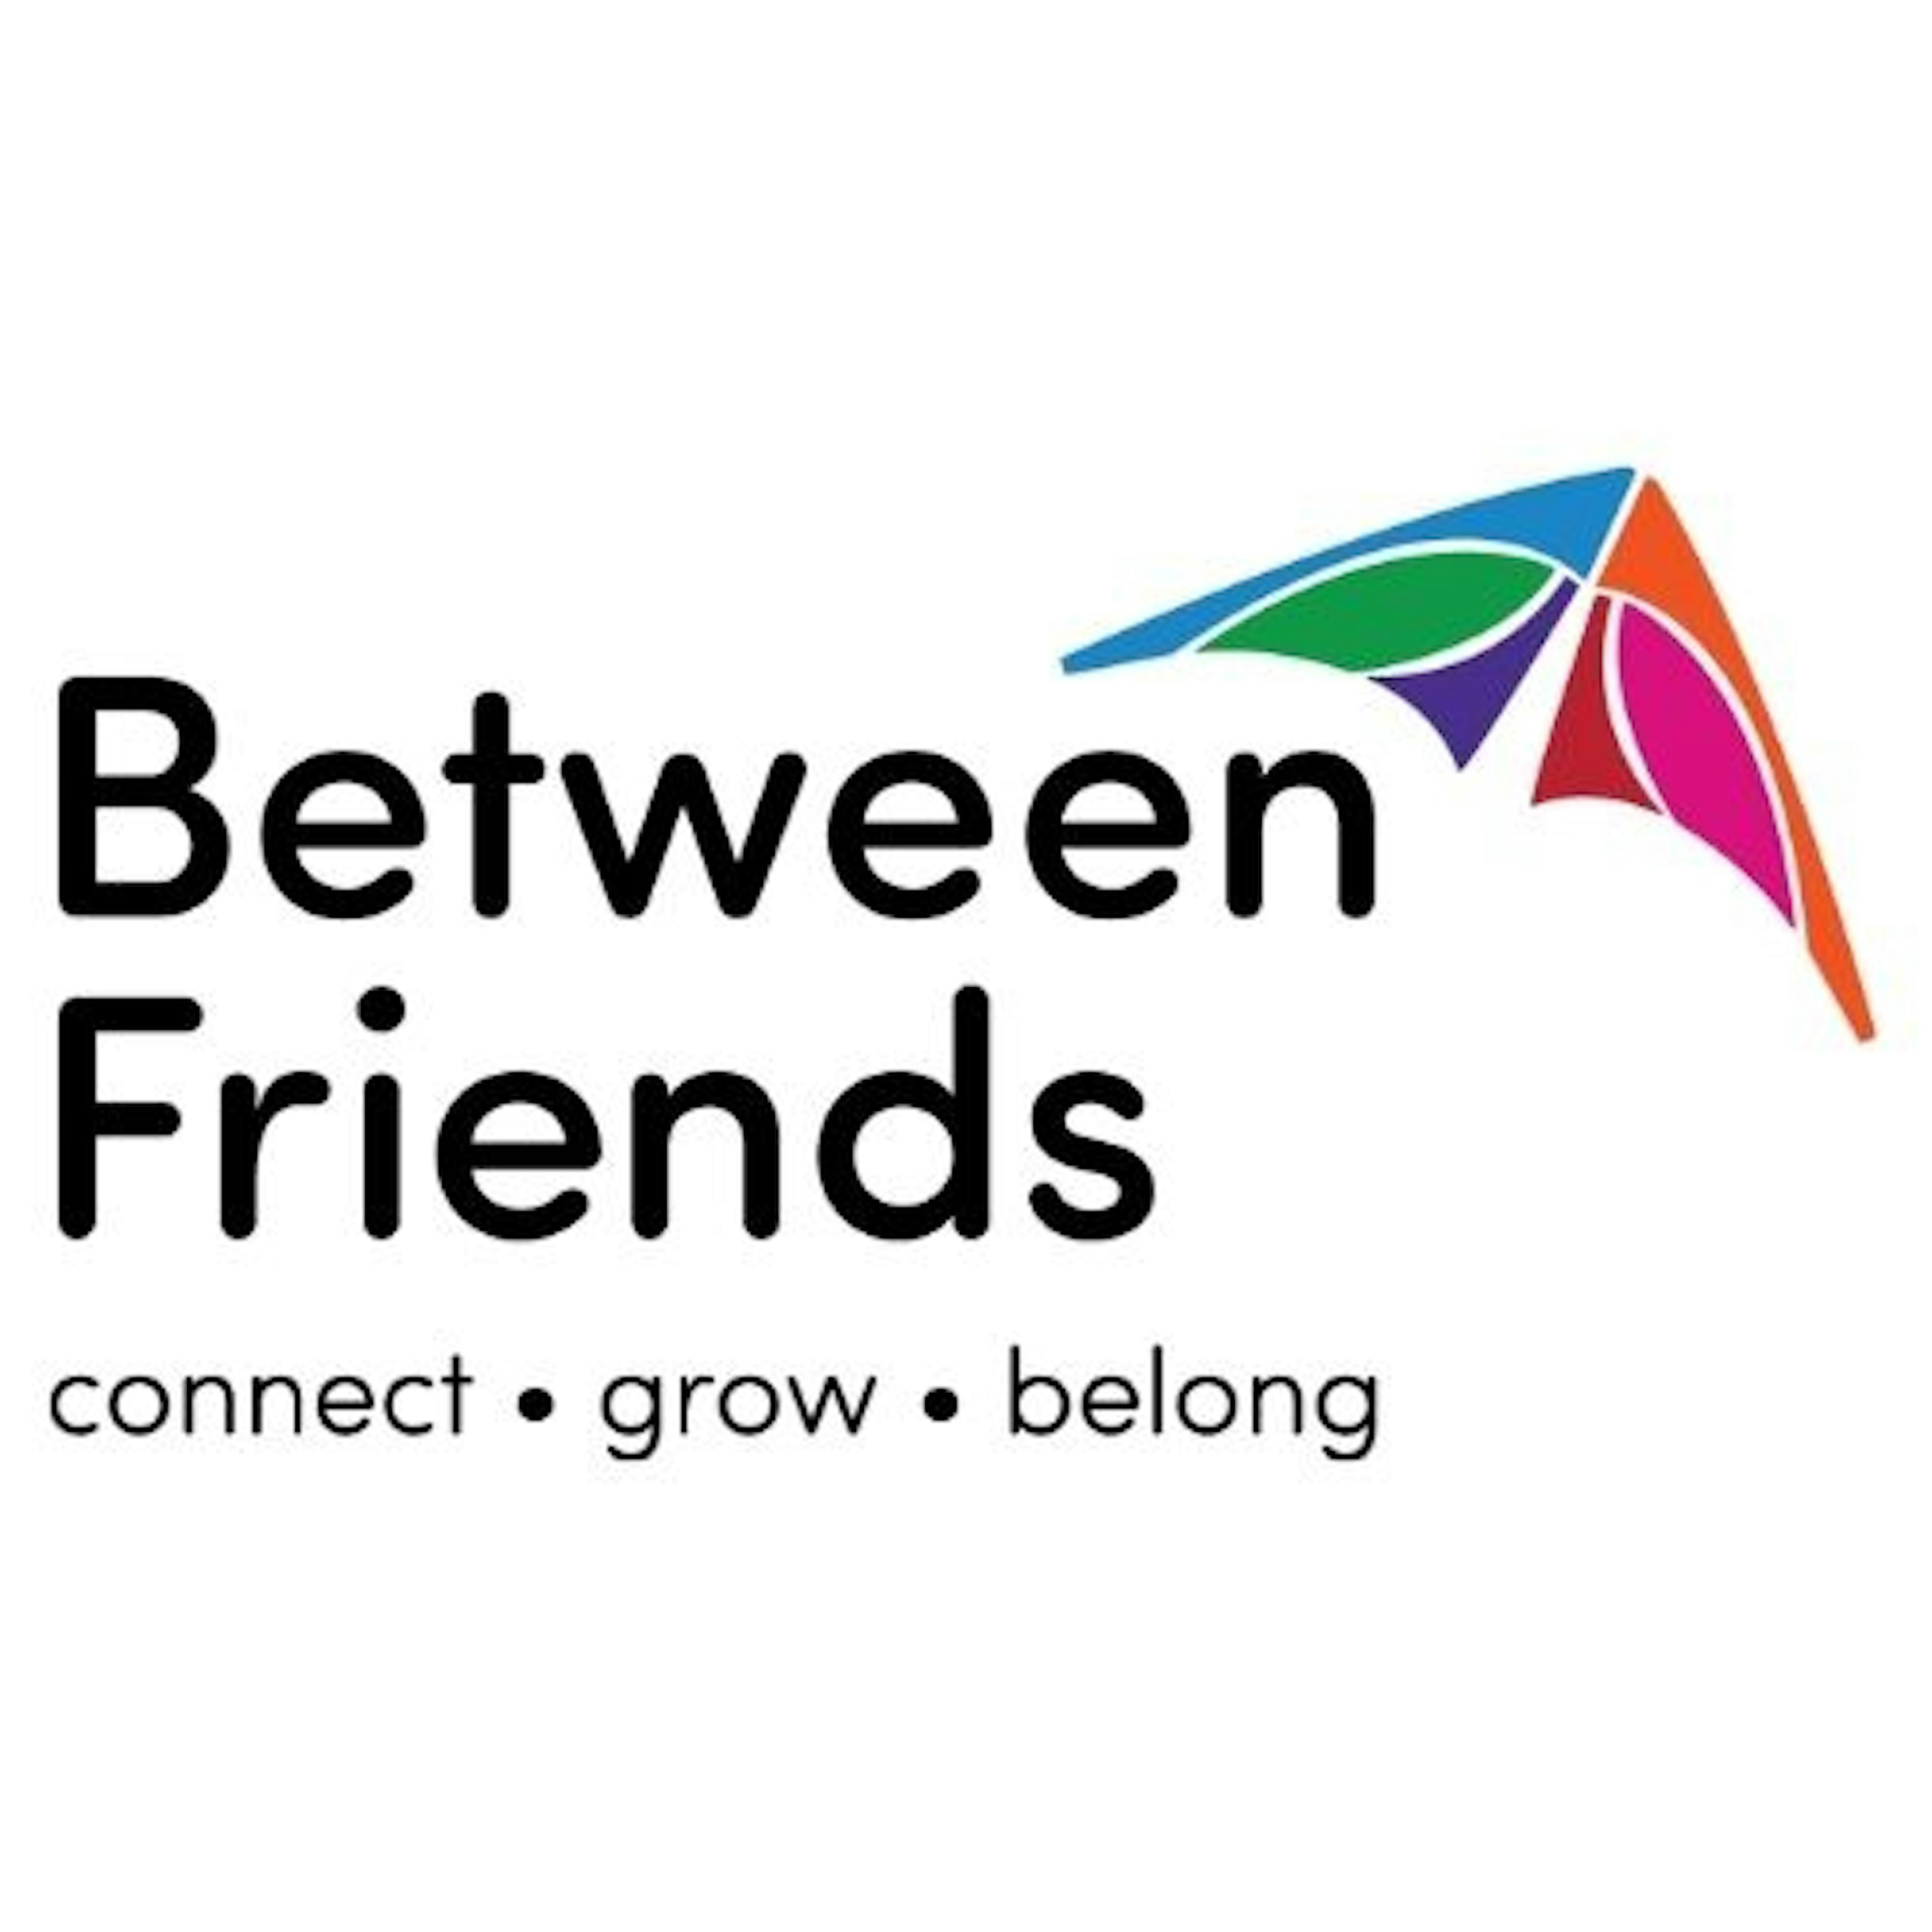 Between Friends logo